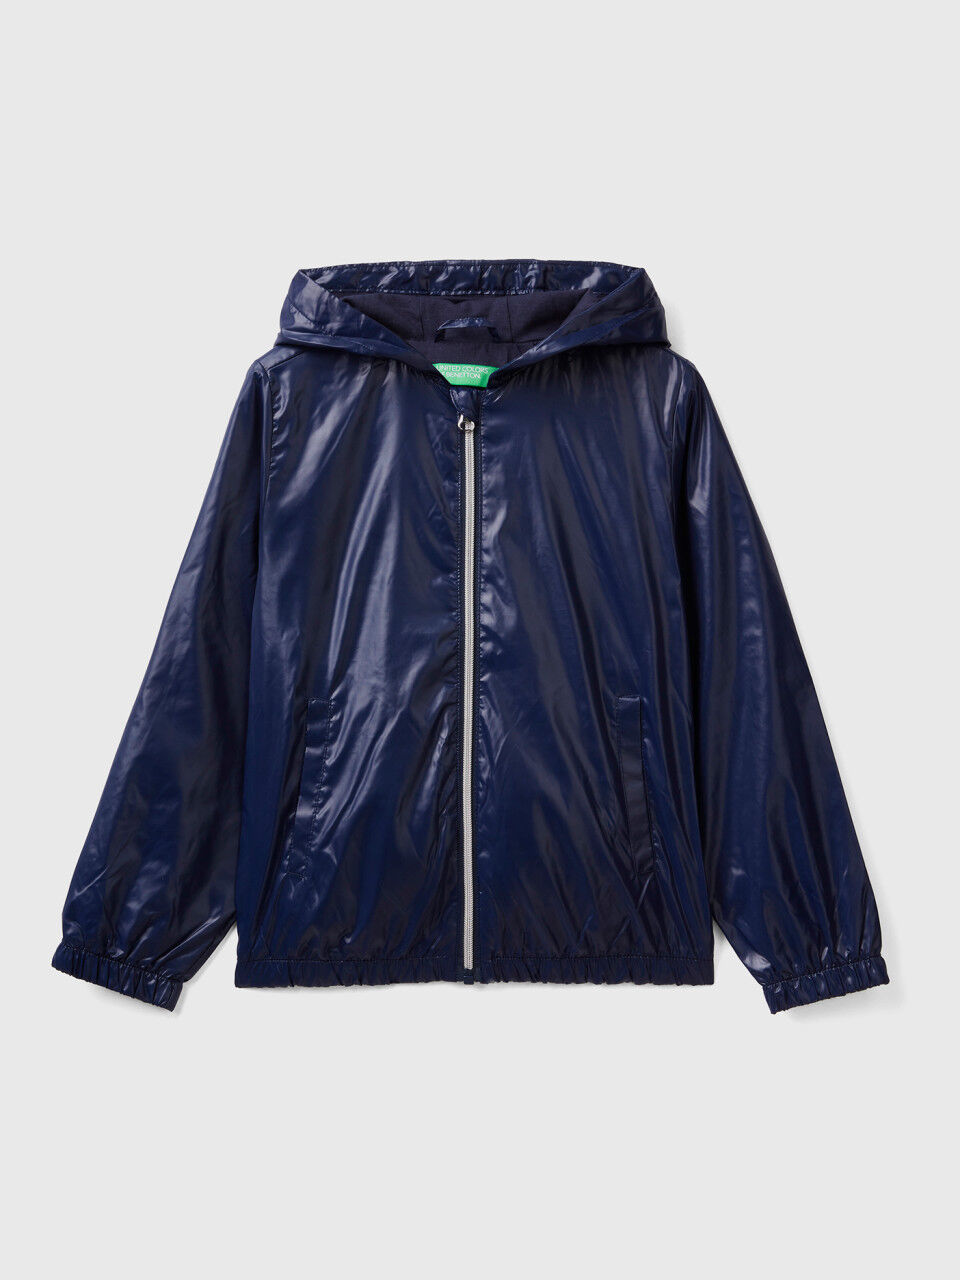 Light "Rain Defender" jacket